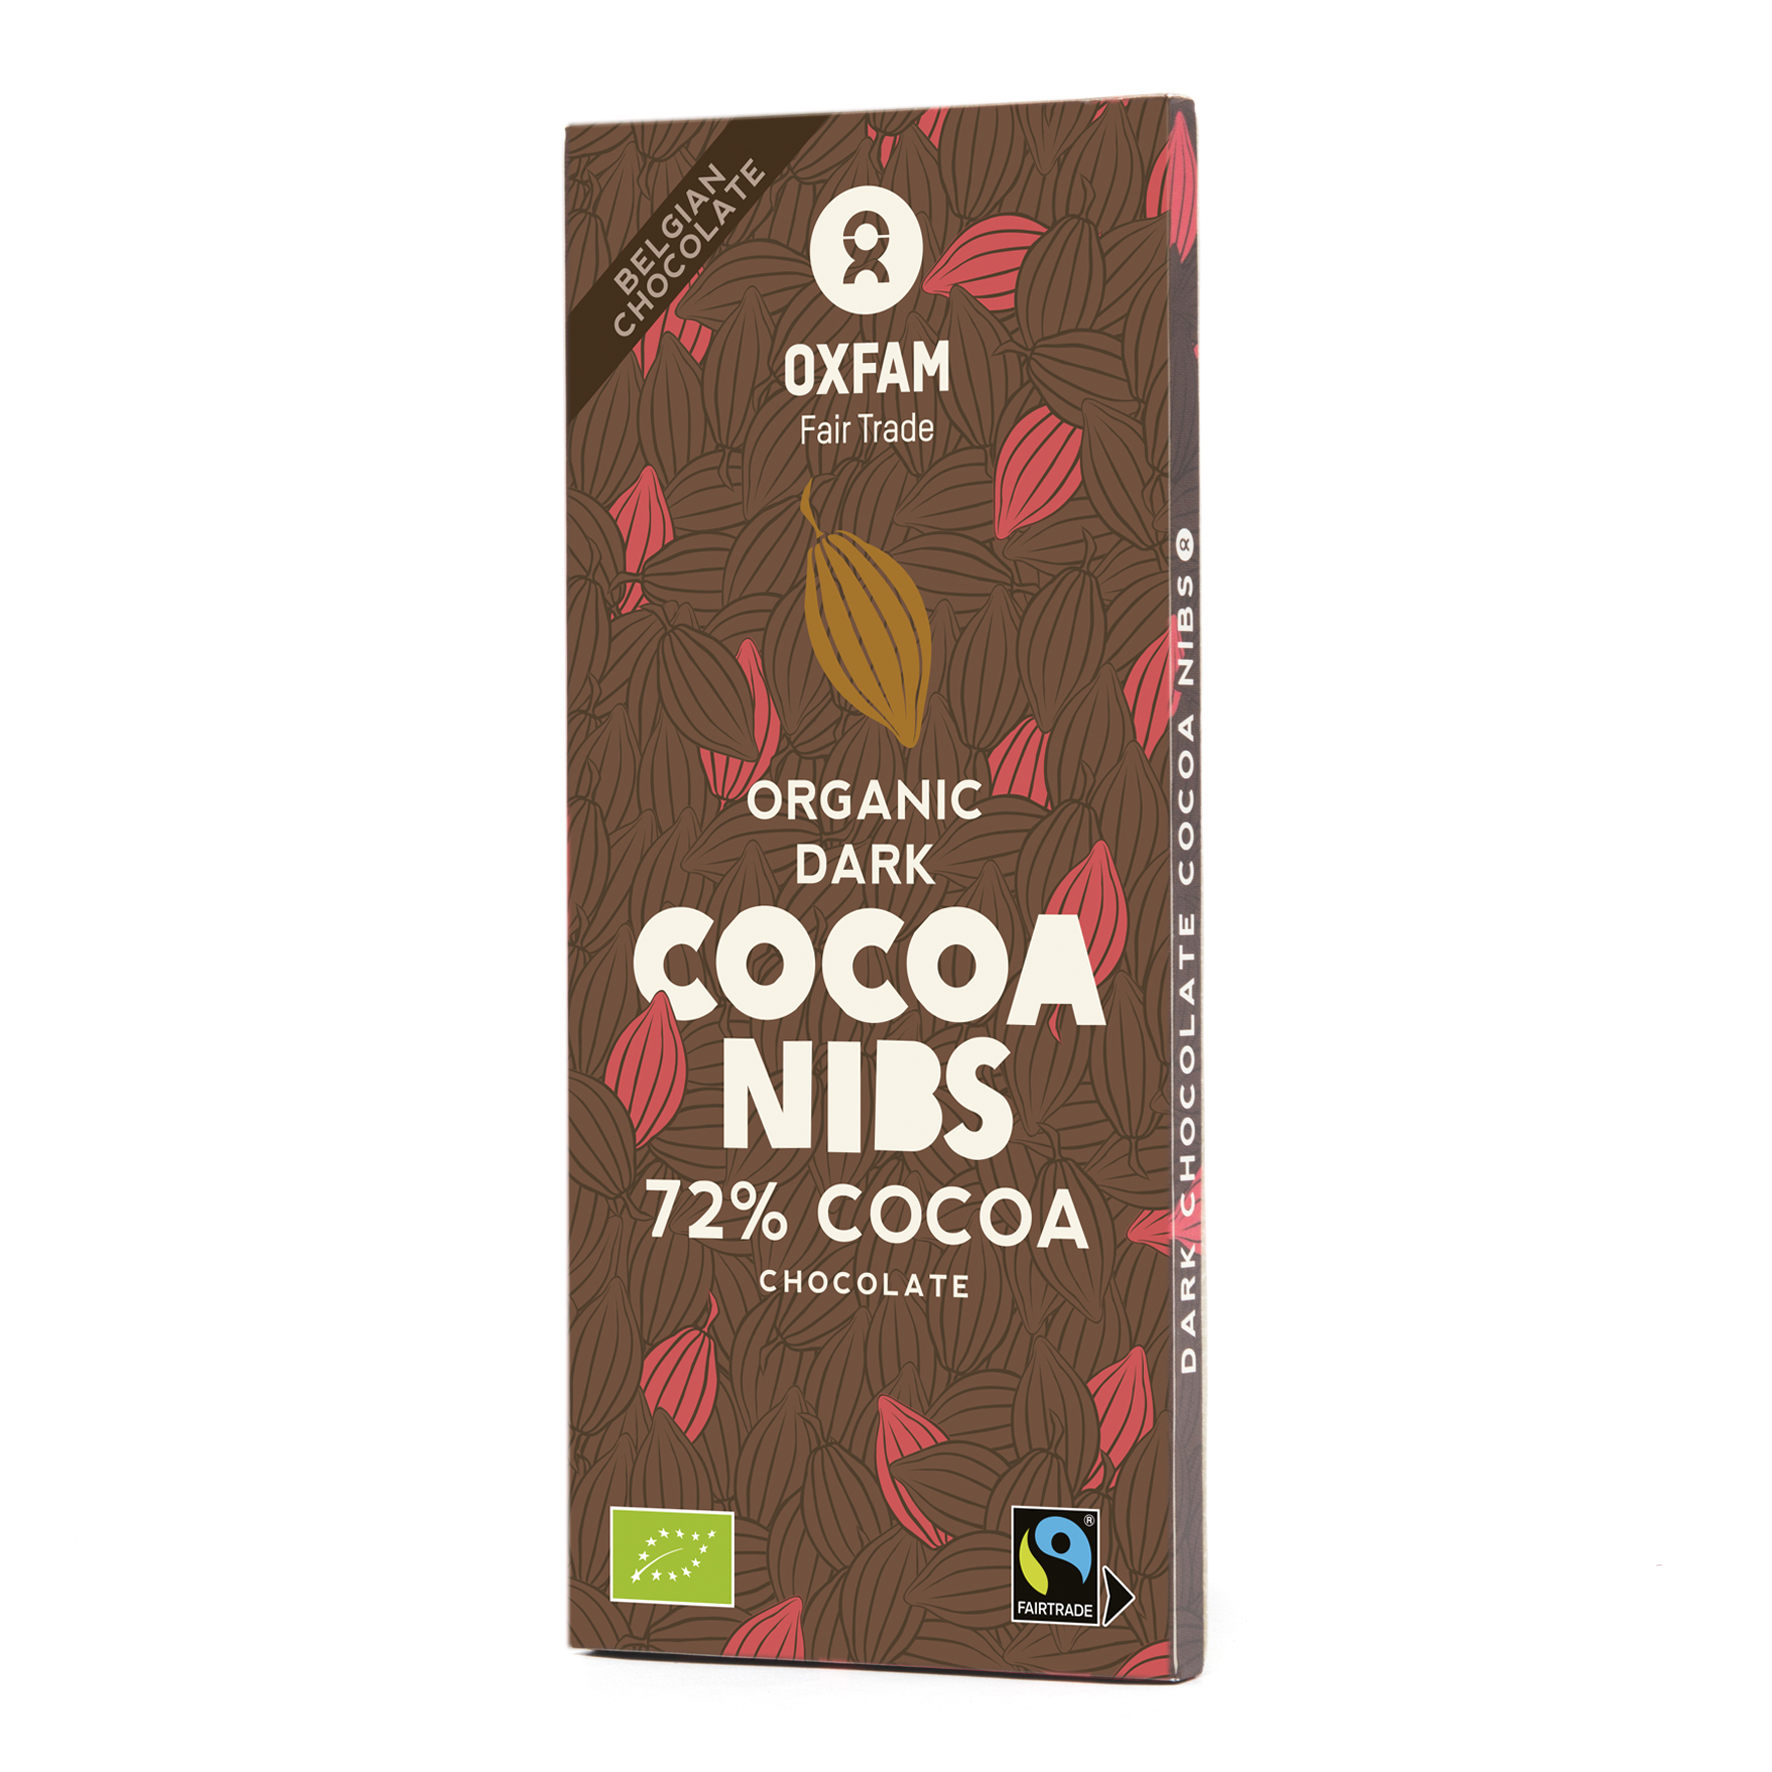 Oxfam Pure chocolade met cacaonibs bio 100g